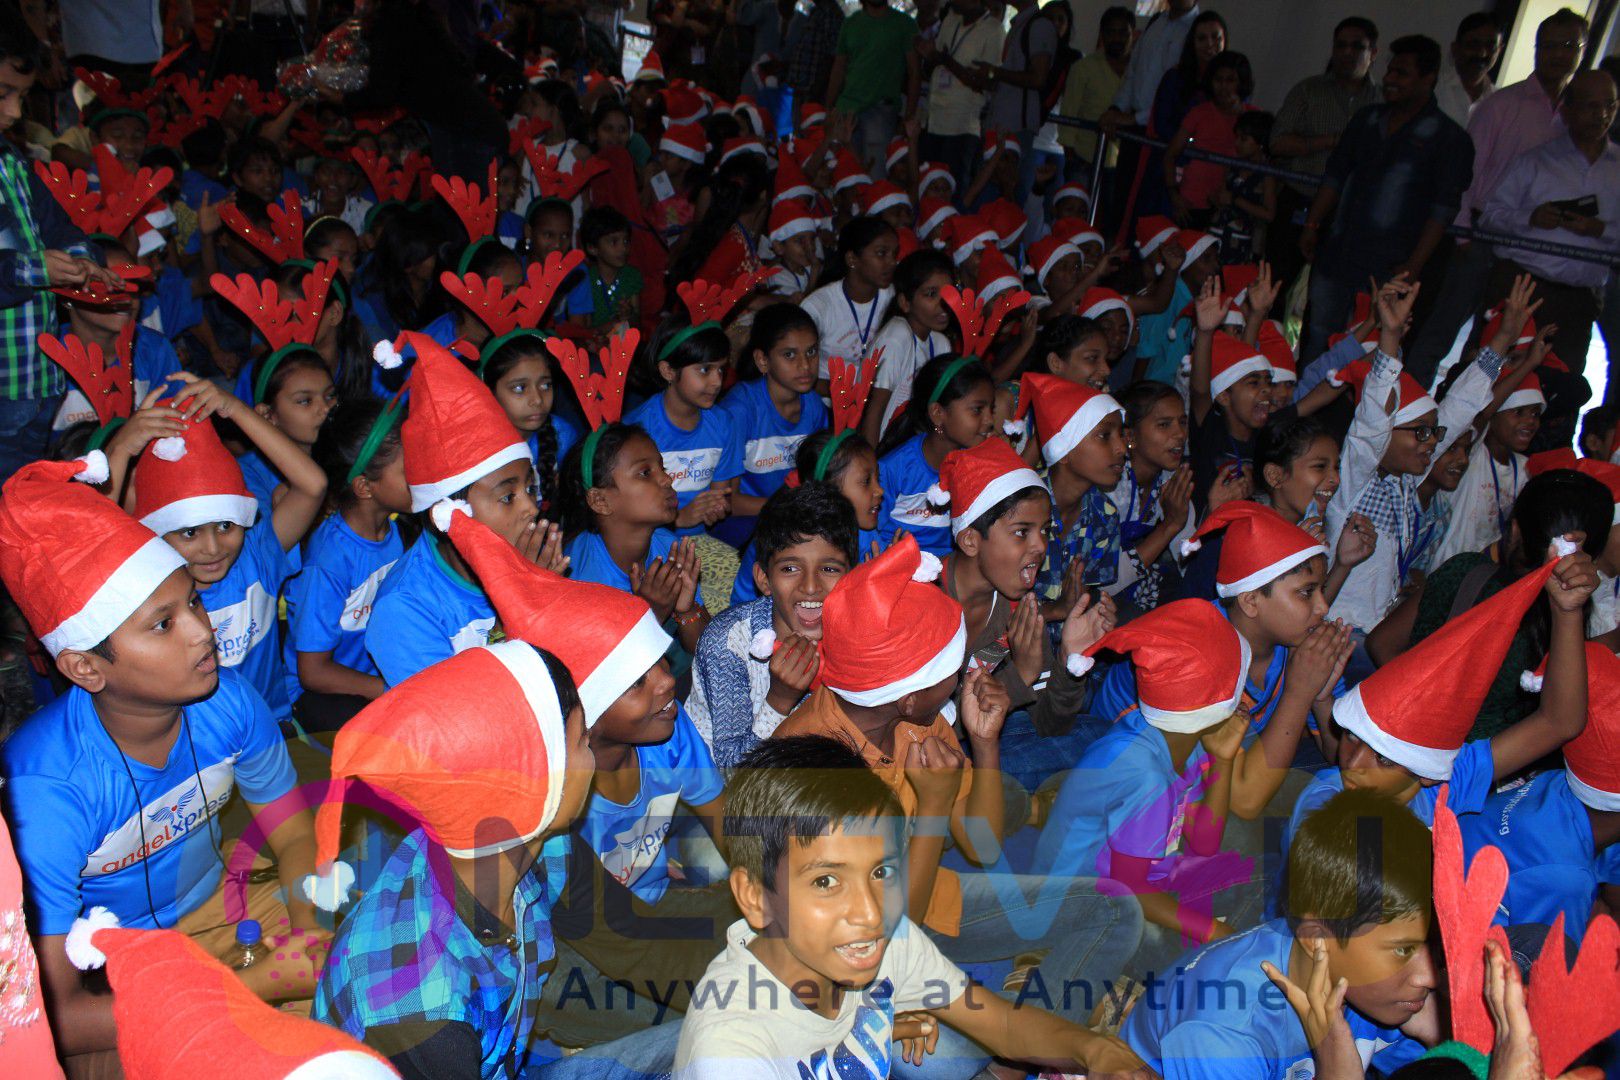 Big FM & Mumbai Metro Host Christmas Initiative BE SANTA With Palak Muchhal Photos Hindi Gallery